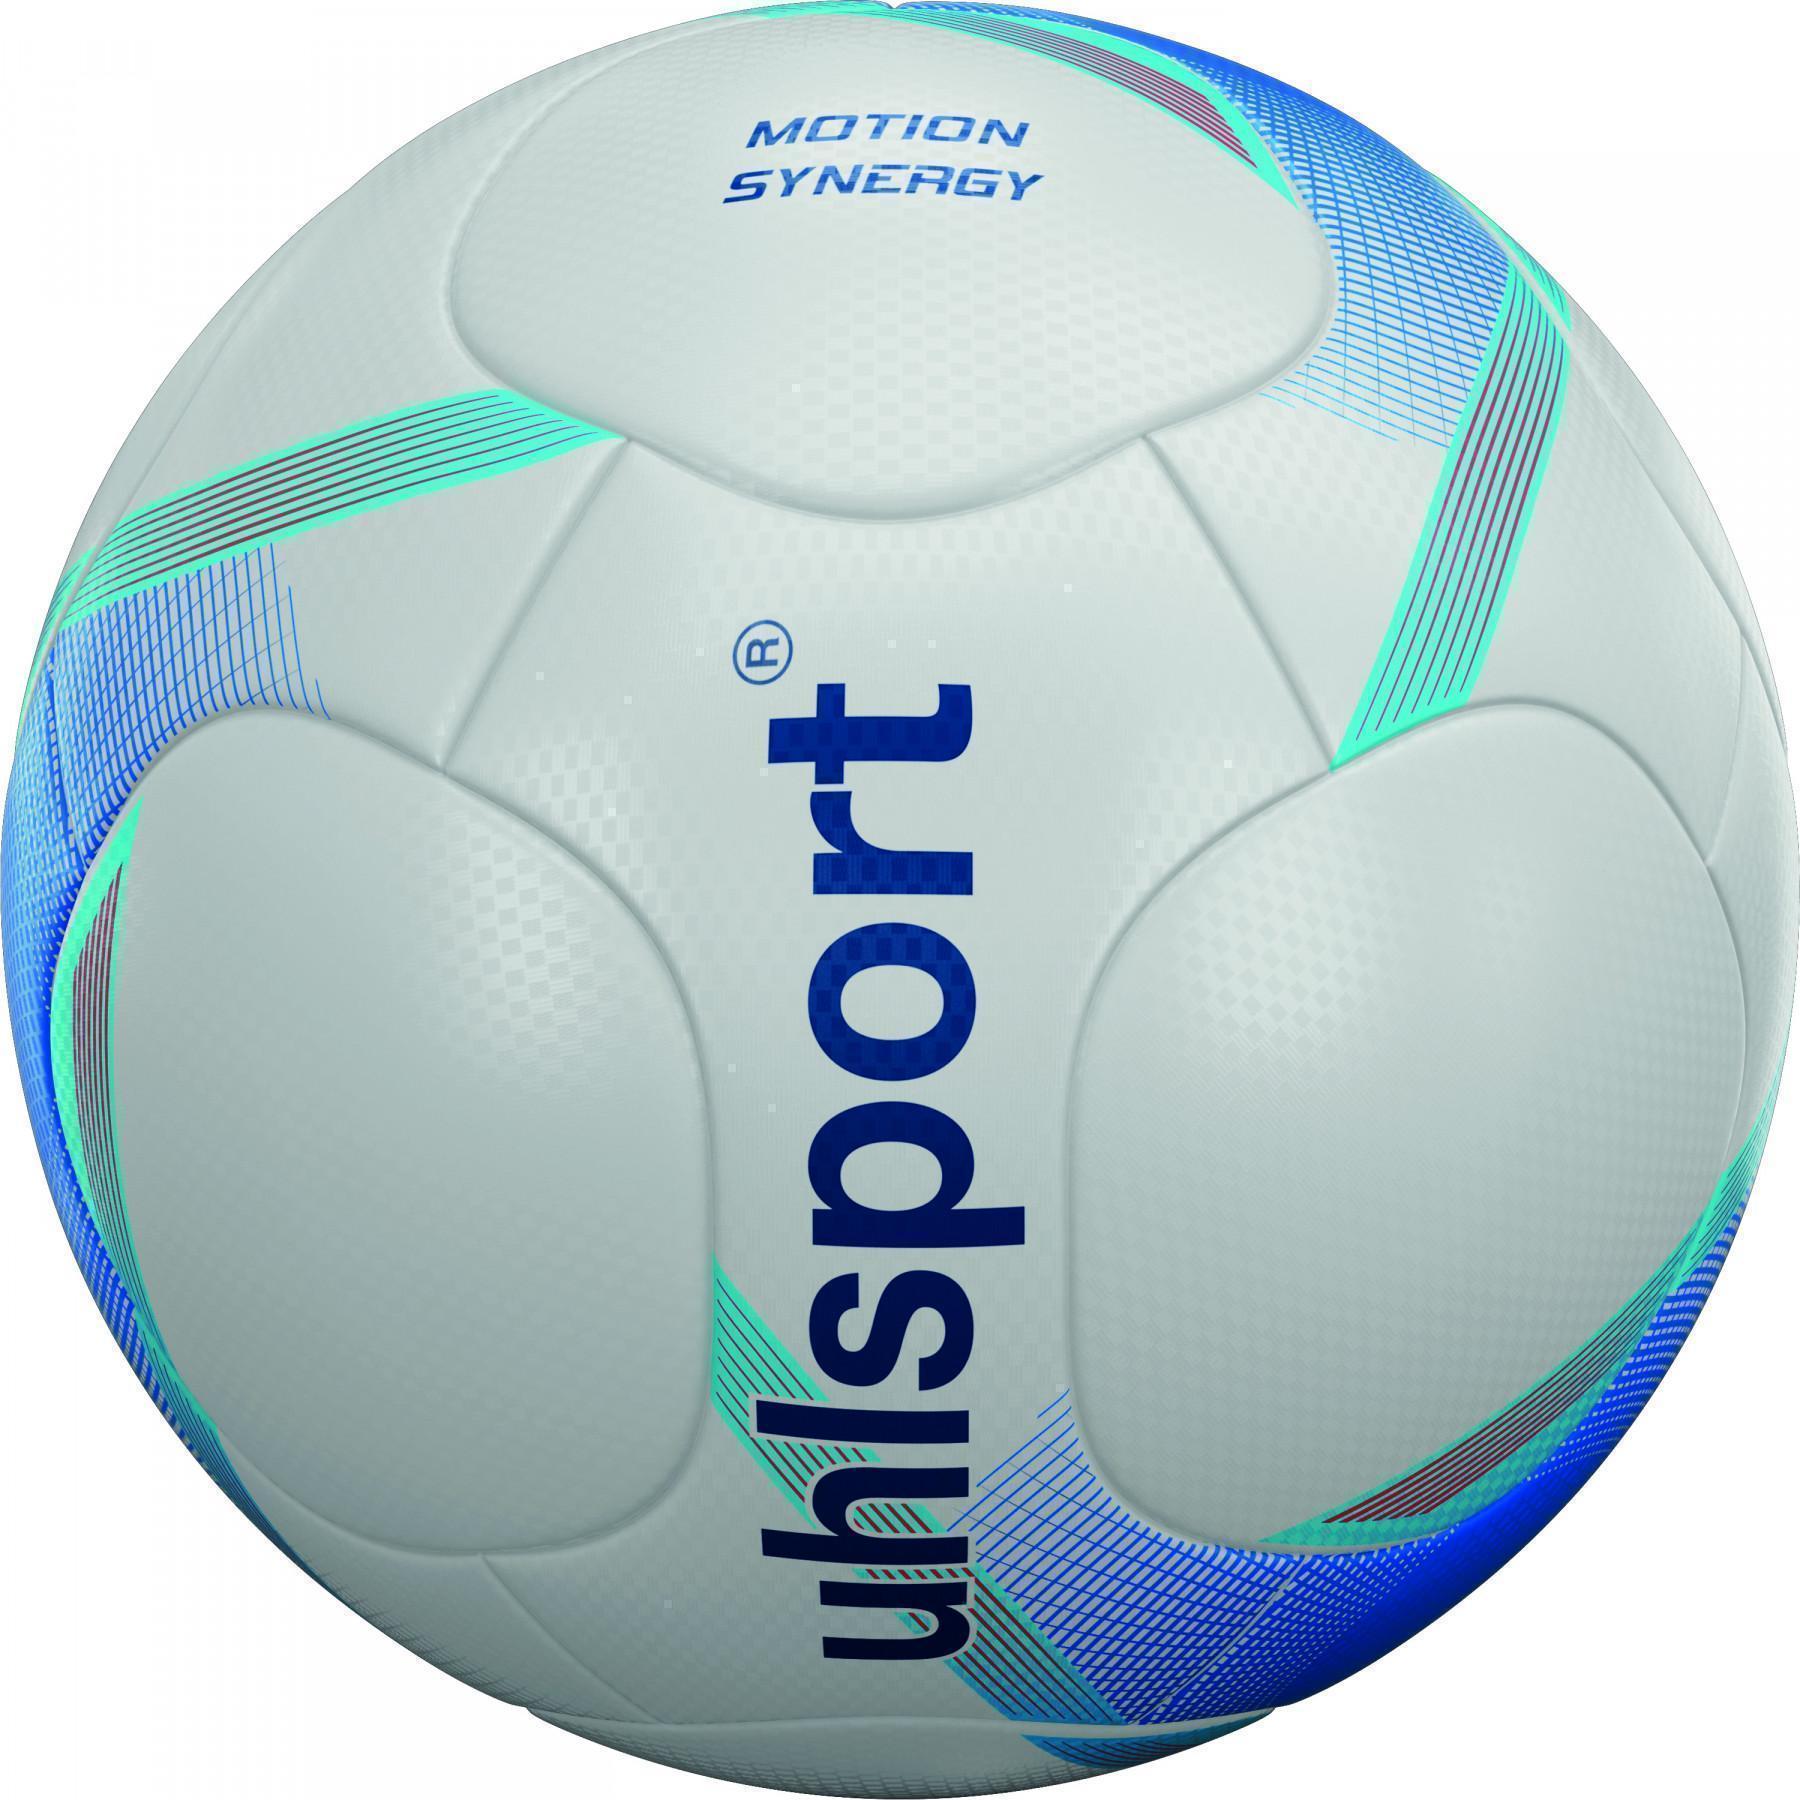 Ballon Uhlsport Motion synergy